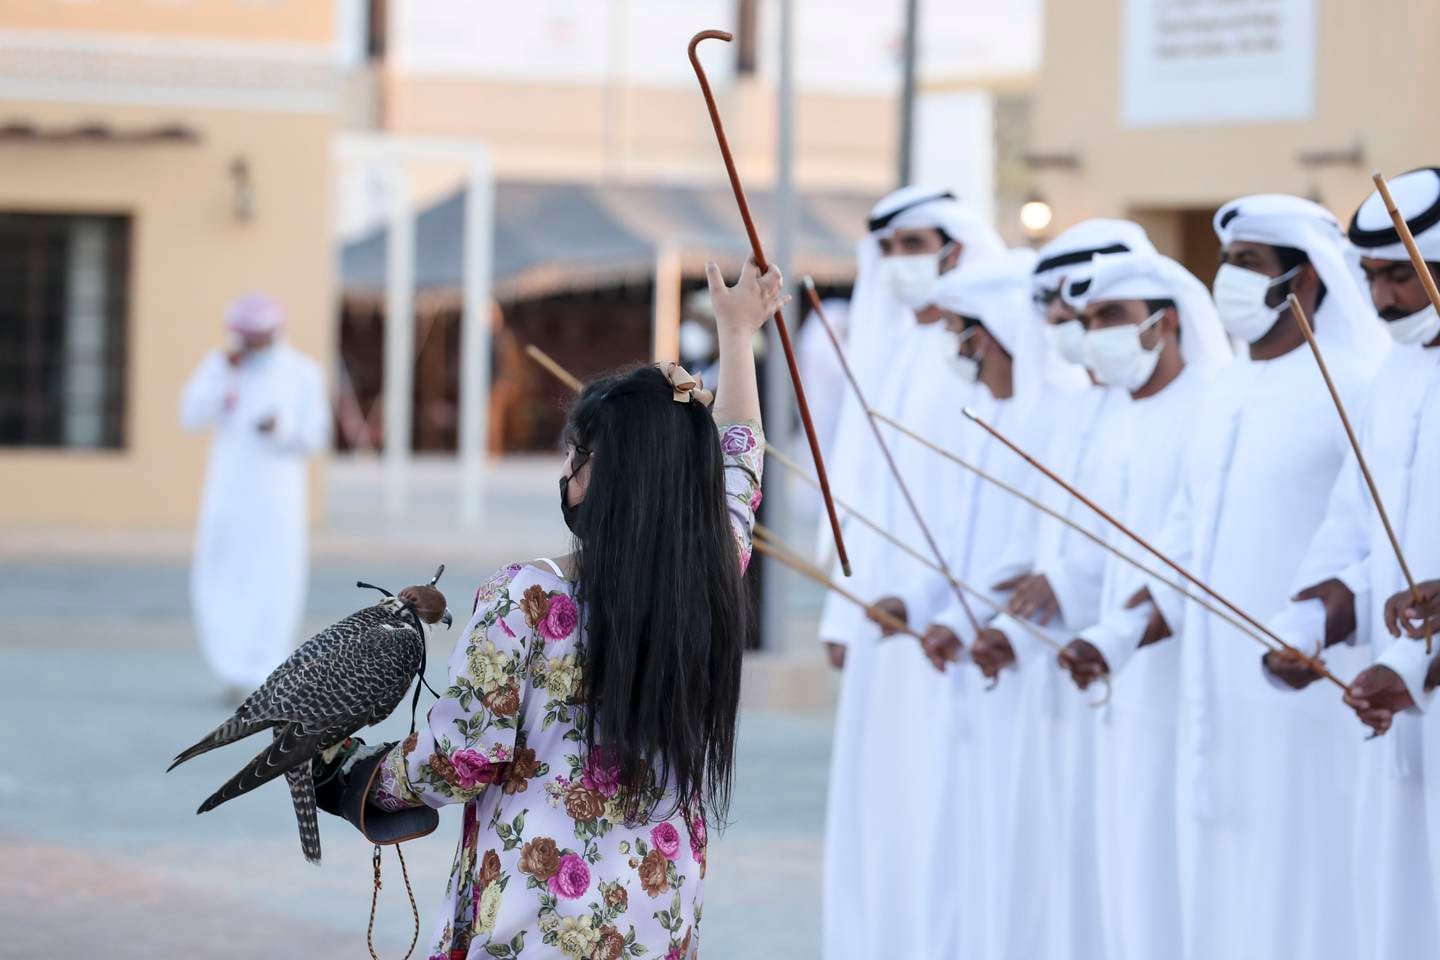 Alia Obaid, 8, joins the men in performing the traditional Emirati dance at Al Dhafra Festival in Abu Dhabi on January 13. Khushnum Bhandari / The National
